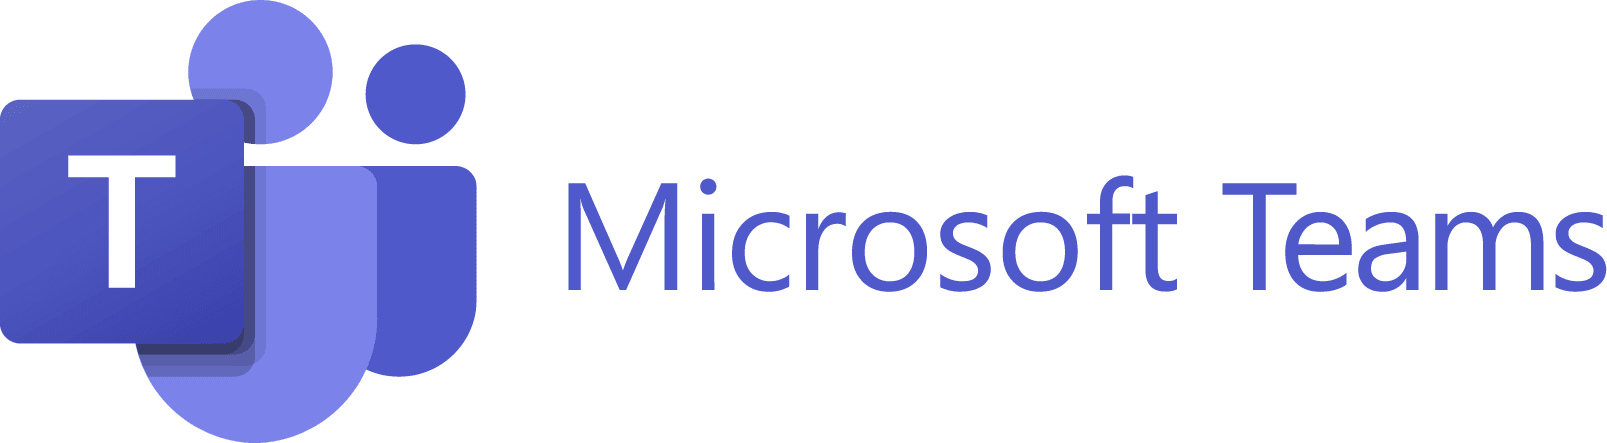 Мс тимс. Team логотип. Microsoft Teams. Microsoft Teams лого. Тимс логотип.